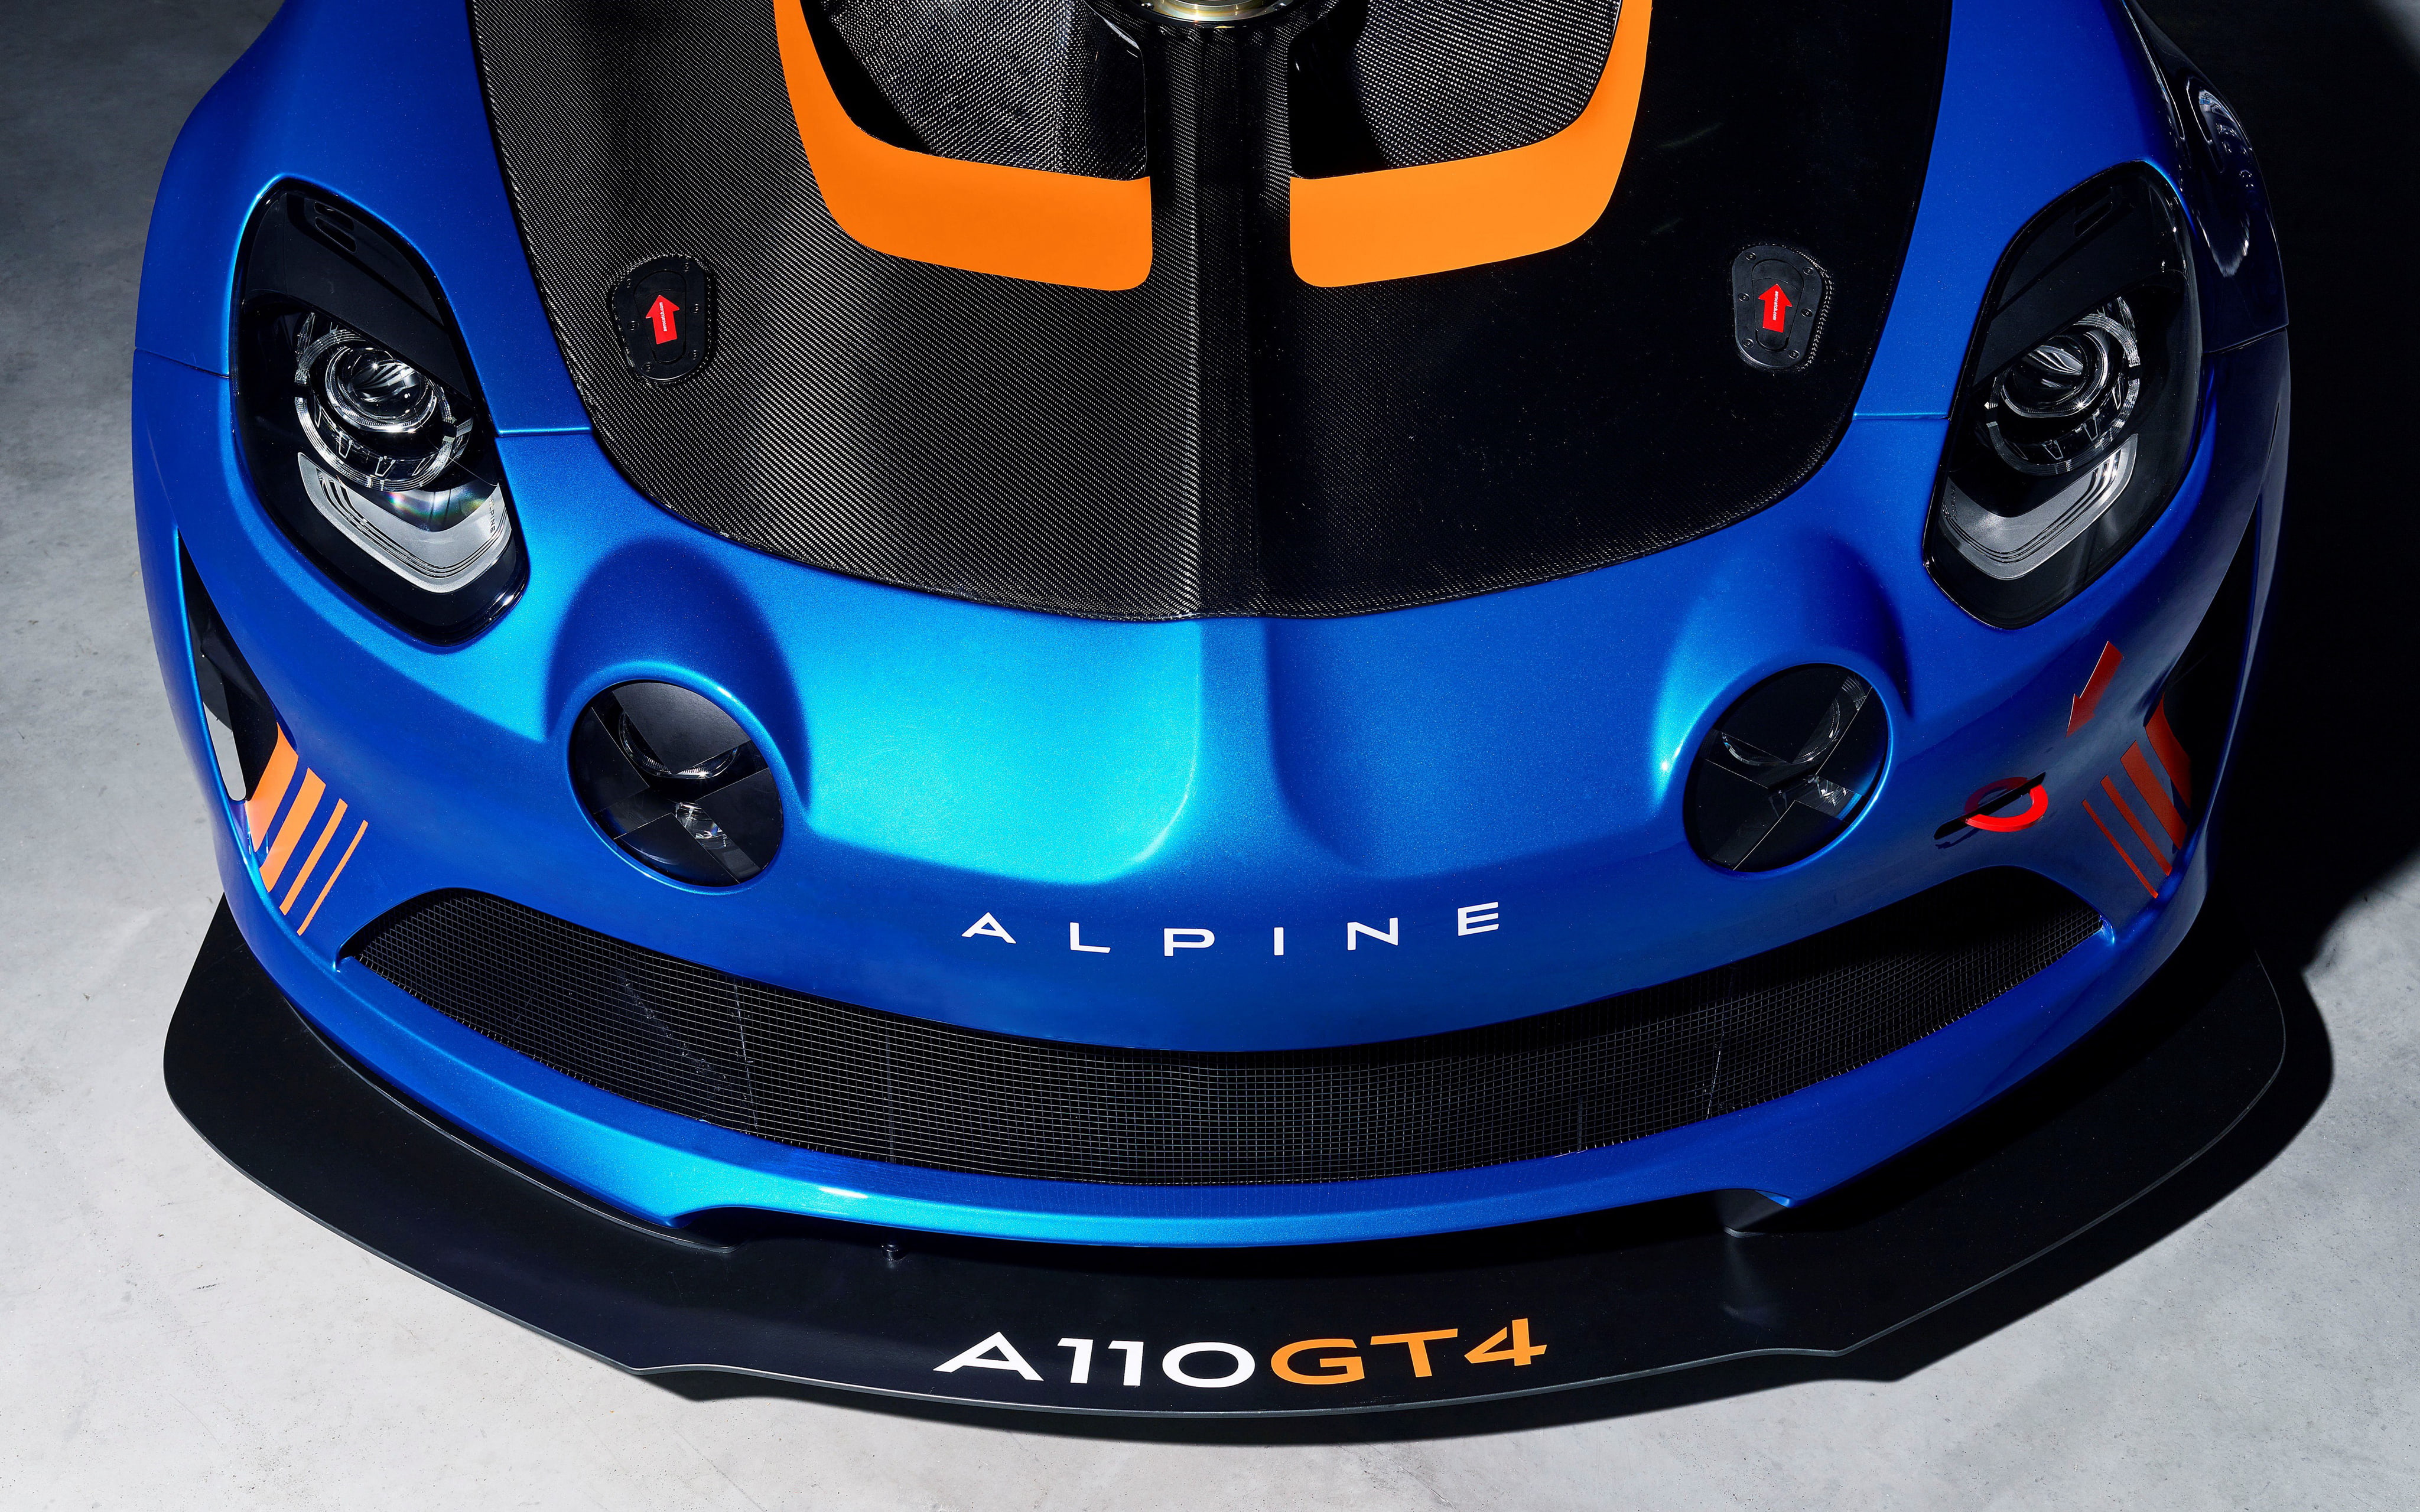 Alpine A110 GT4 Geneva Motor Show 2018 4K, blue, text, close-up